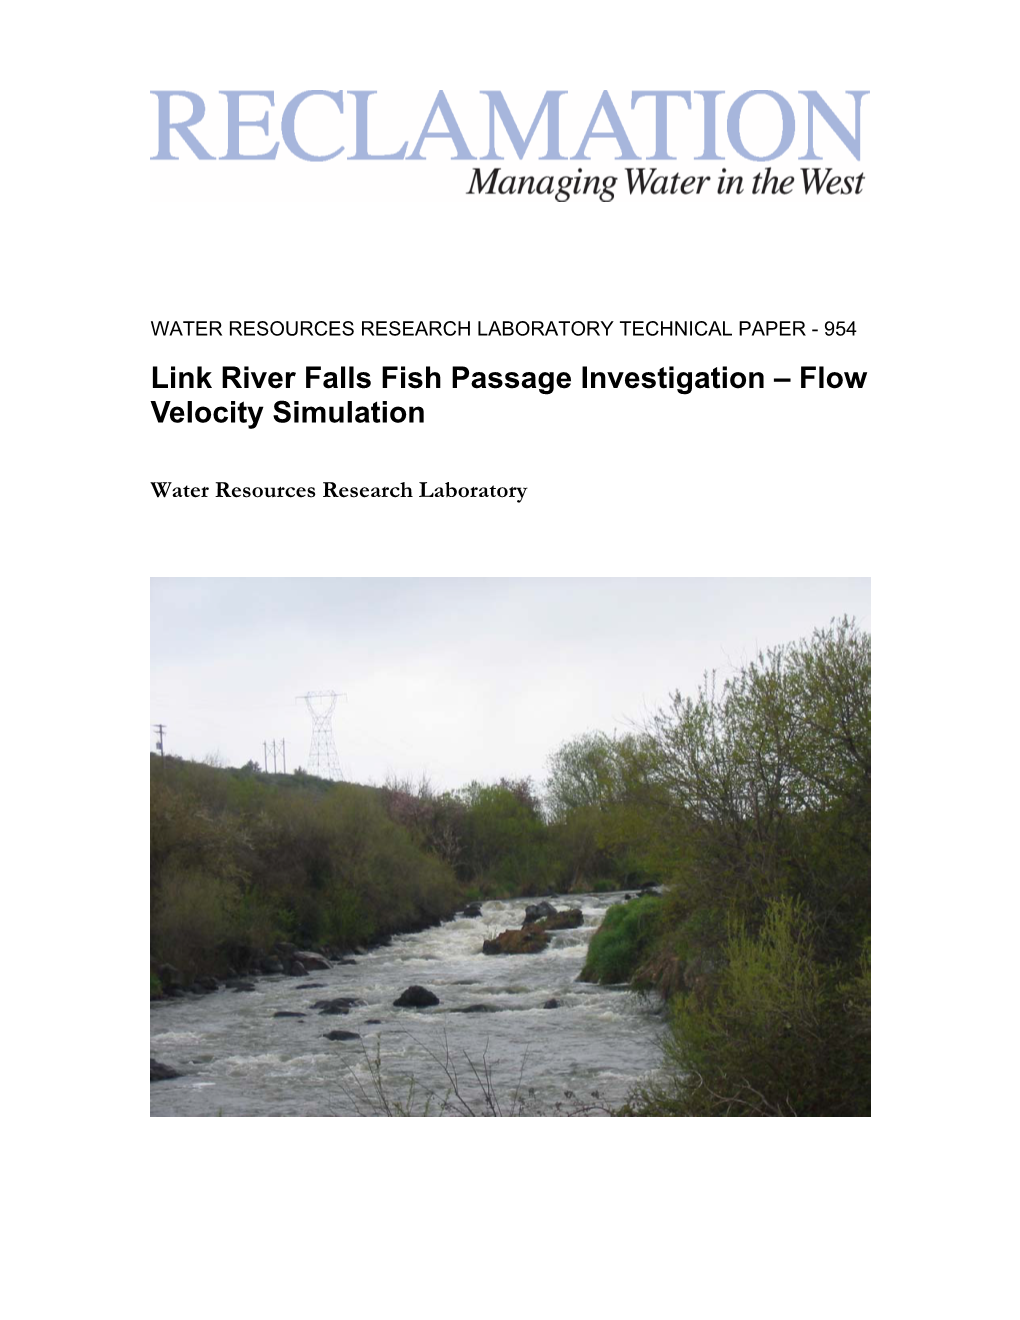 Link River Falls Fish Passage Investigation – Flow Velocity Simulation